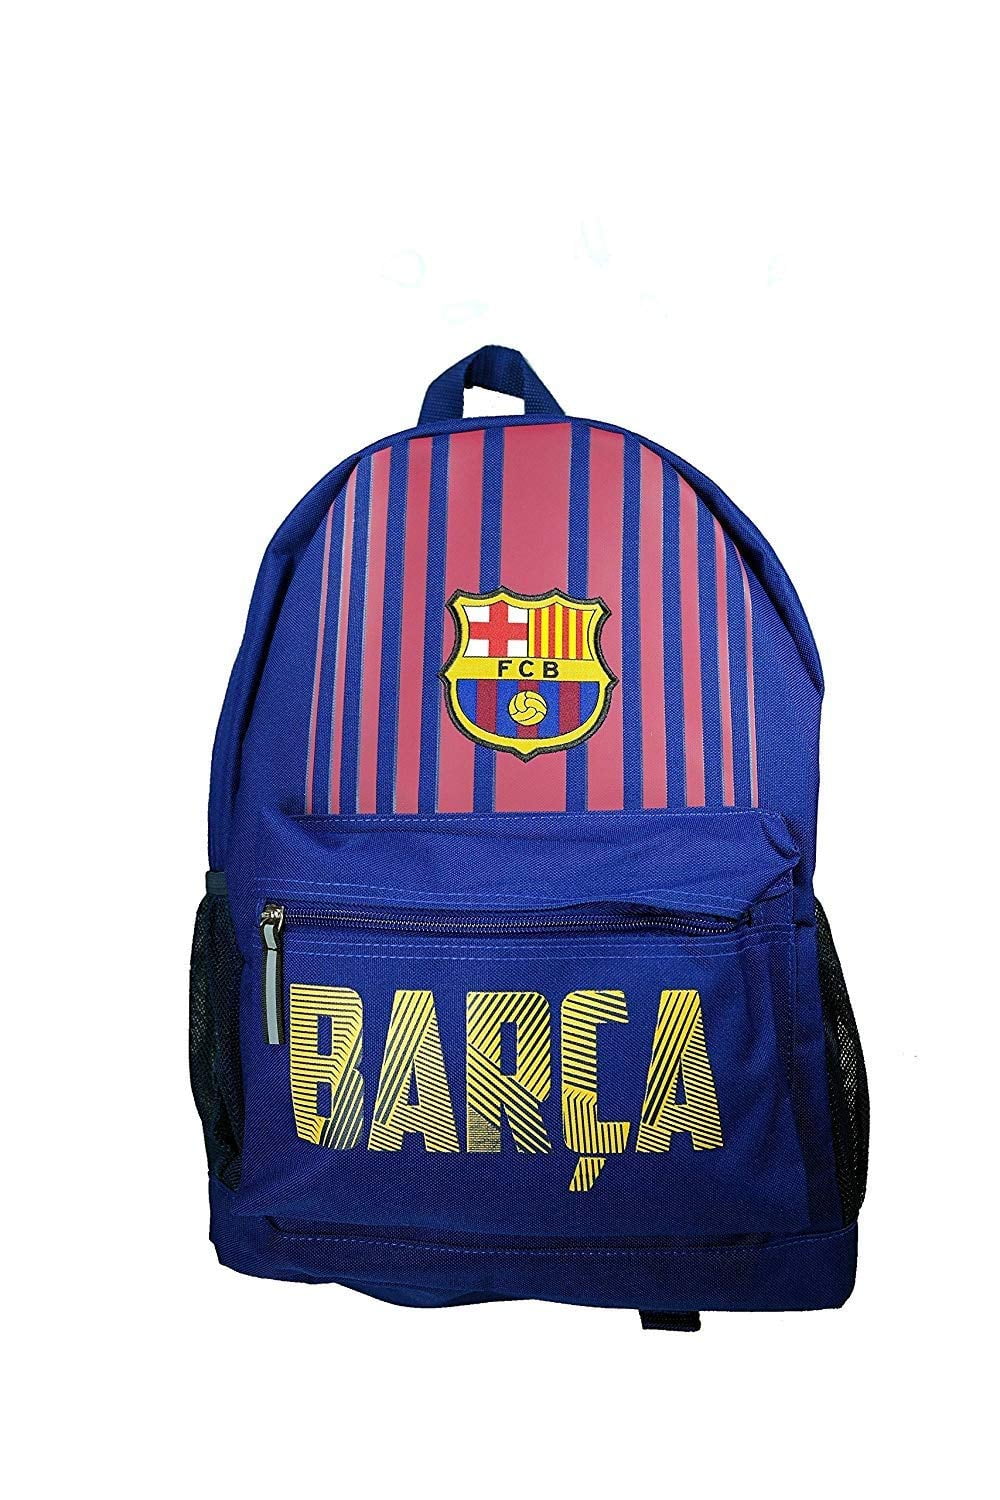 Fc Barcelona Authentic Official Licensed Soccer Drawstring Cinch Sack Bag 02-A3 